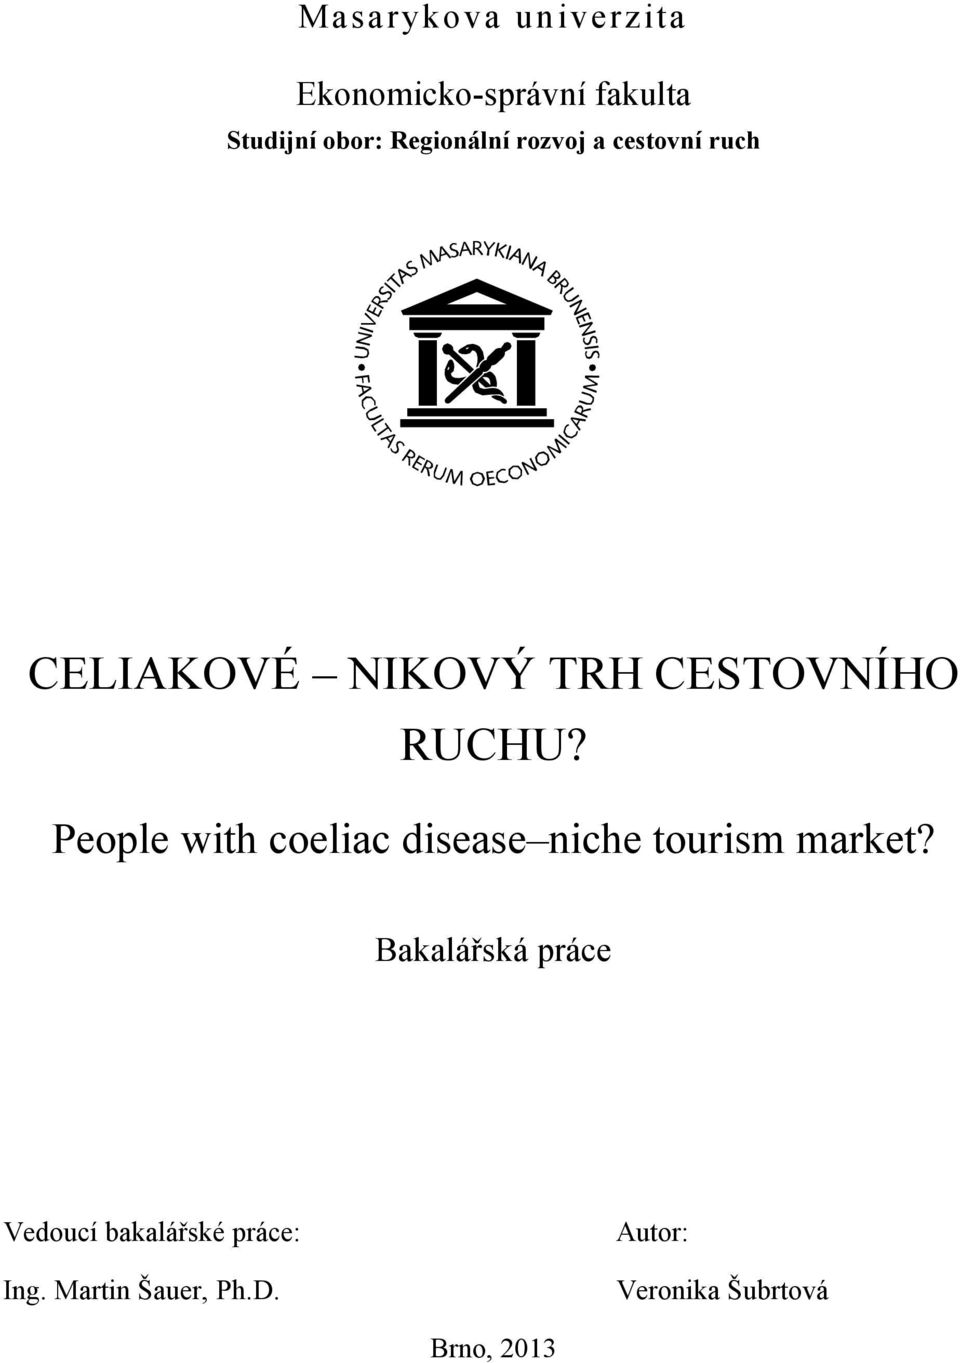 People with coeliac disease niche tourism market?